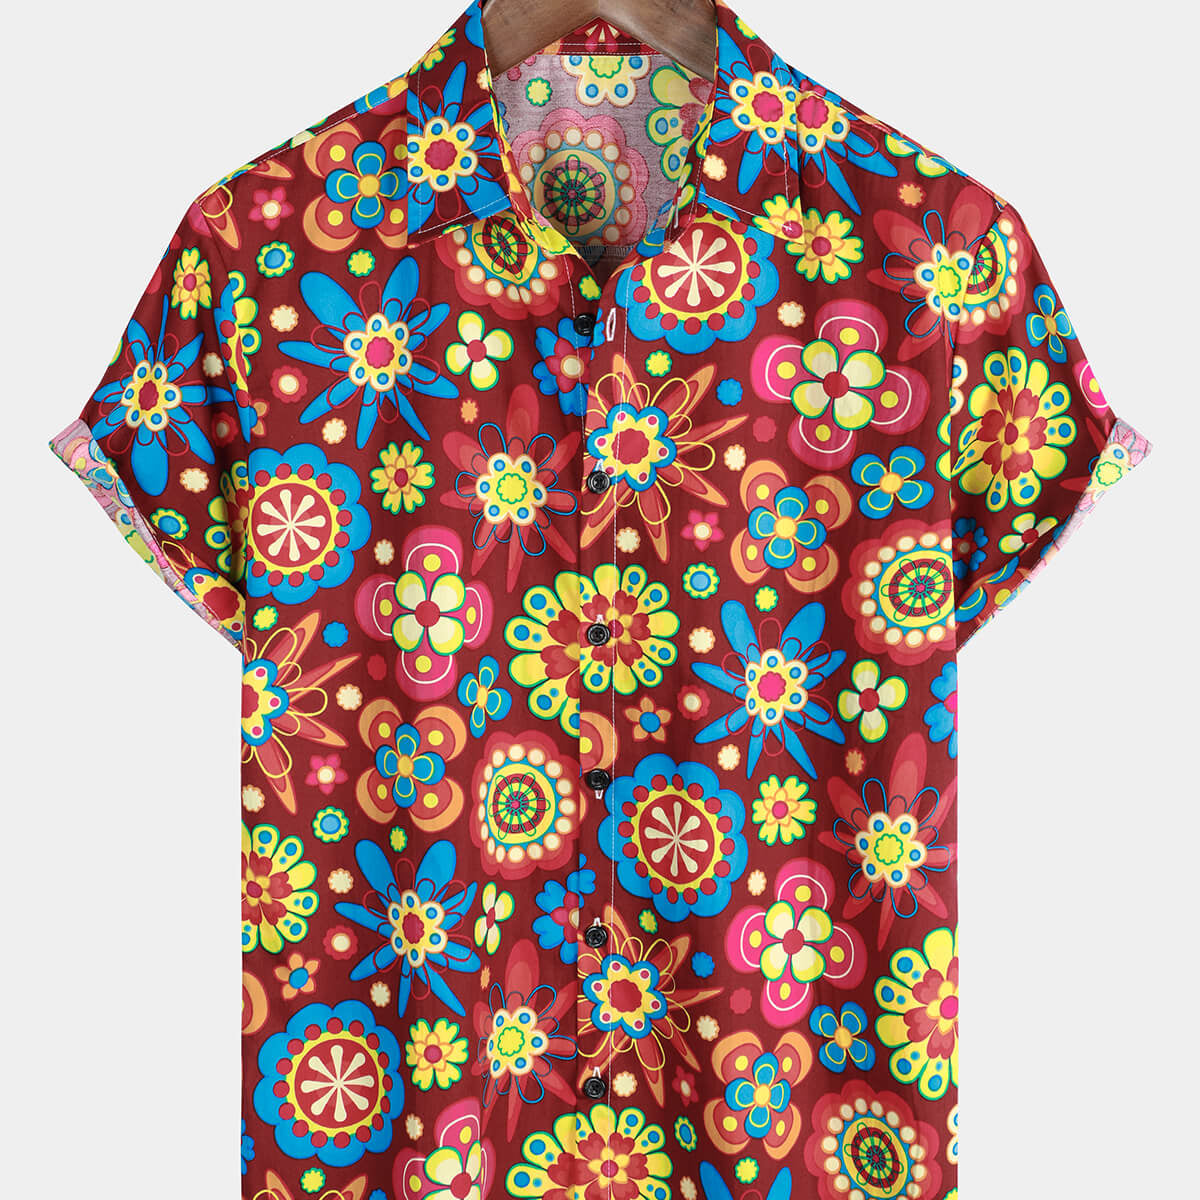 Men's Floral Print Cotton Button Up Short Sleeve Shirt